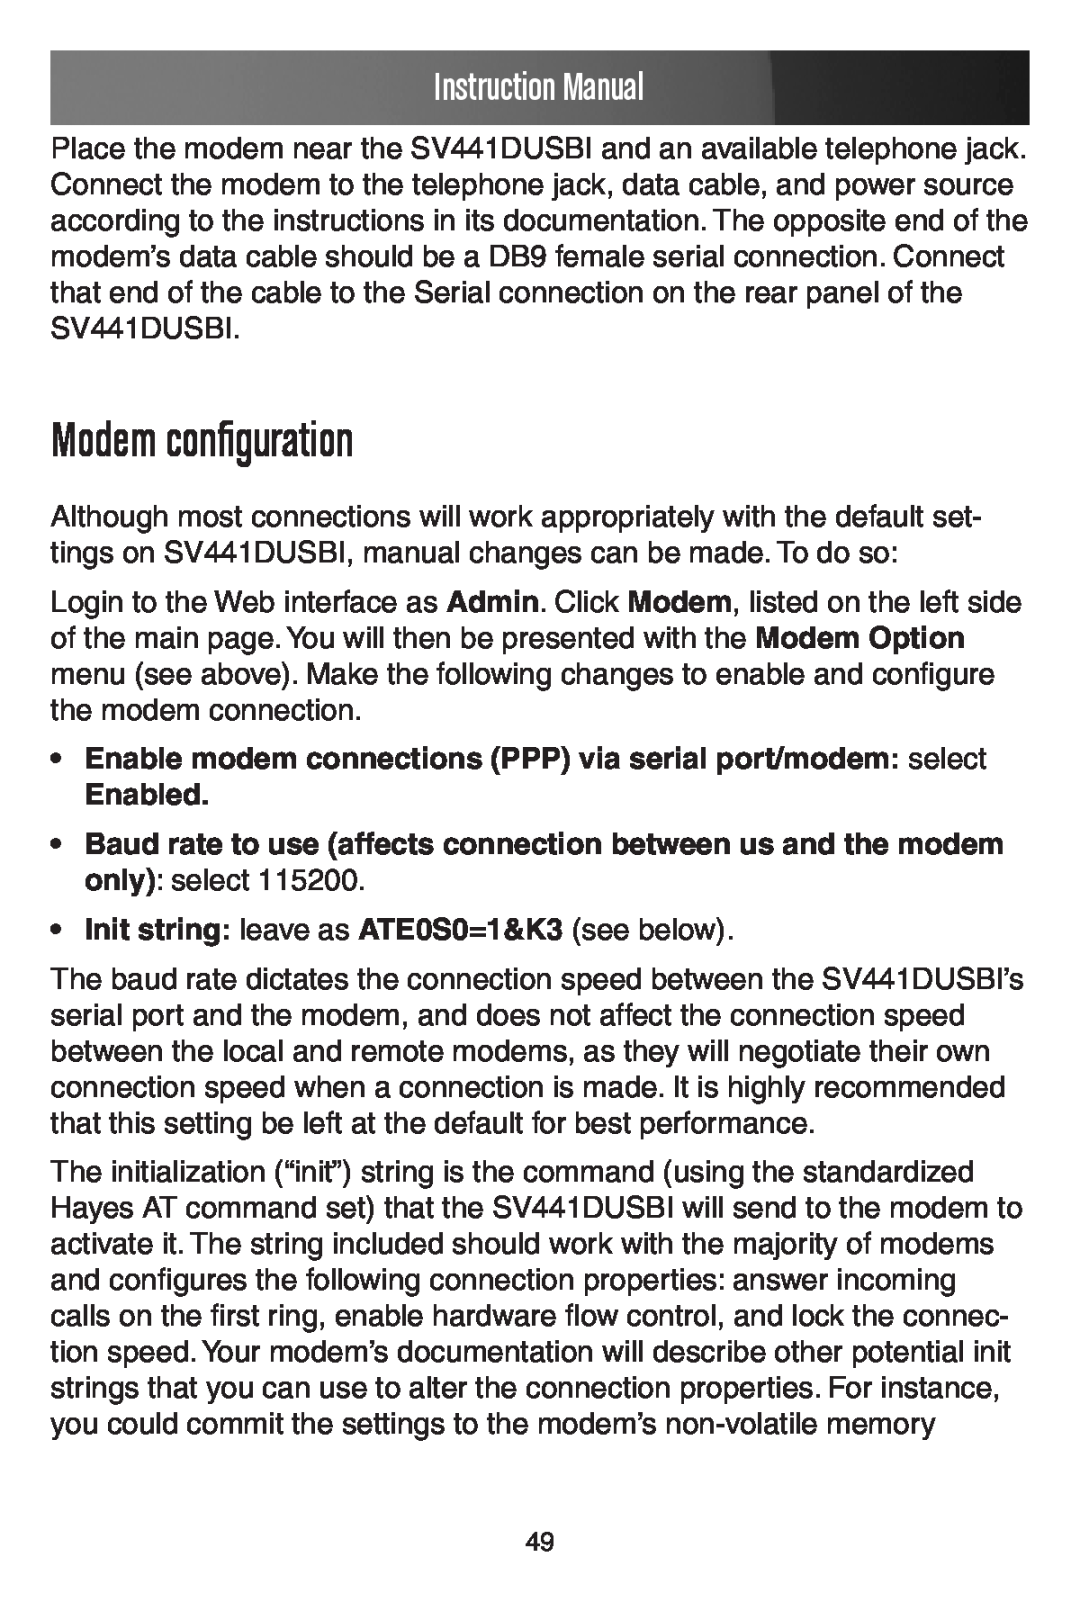 StarTech.com SV441DUSBI Modem configuration, Enable modem connections PPP via serial port/modem select Enabled 